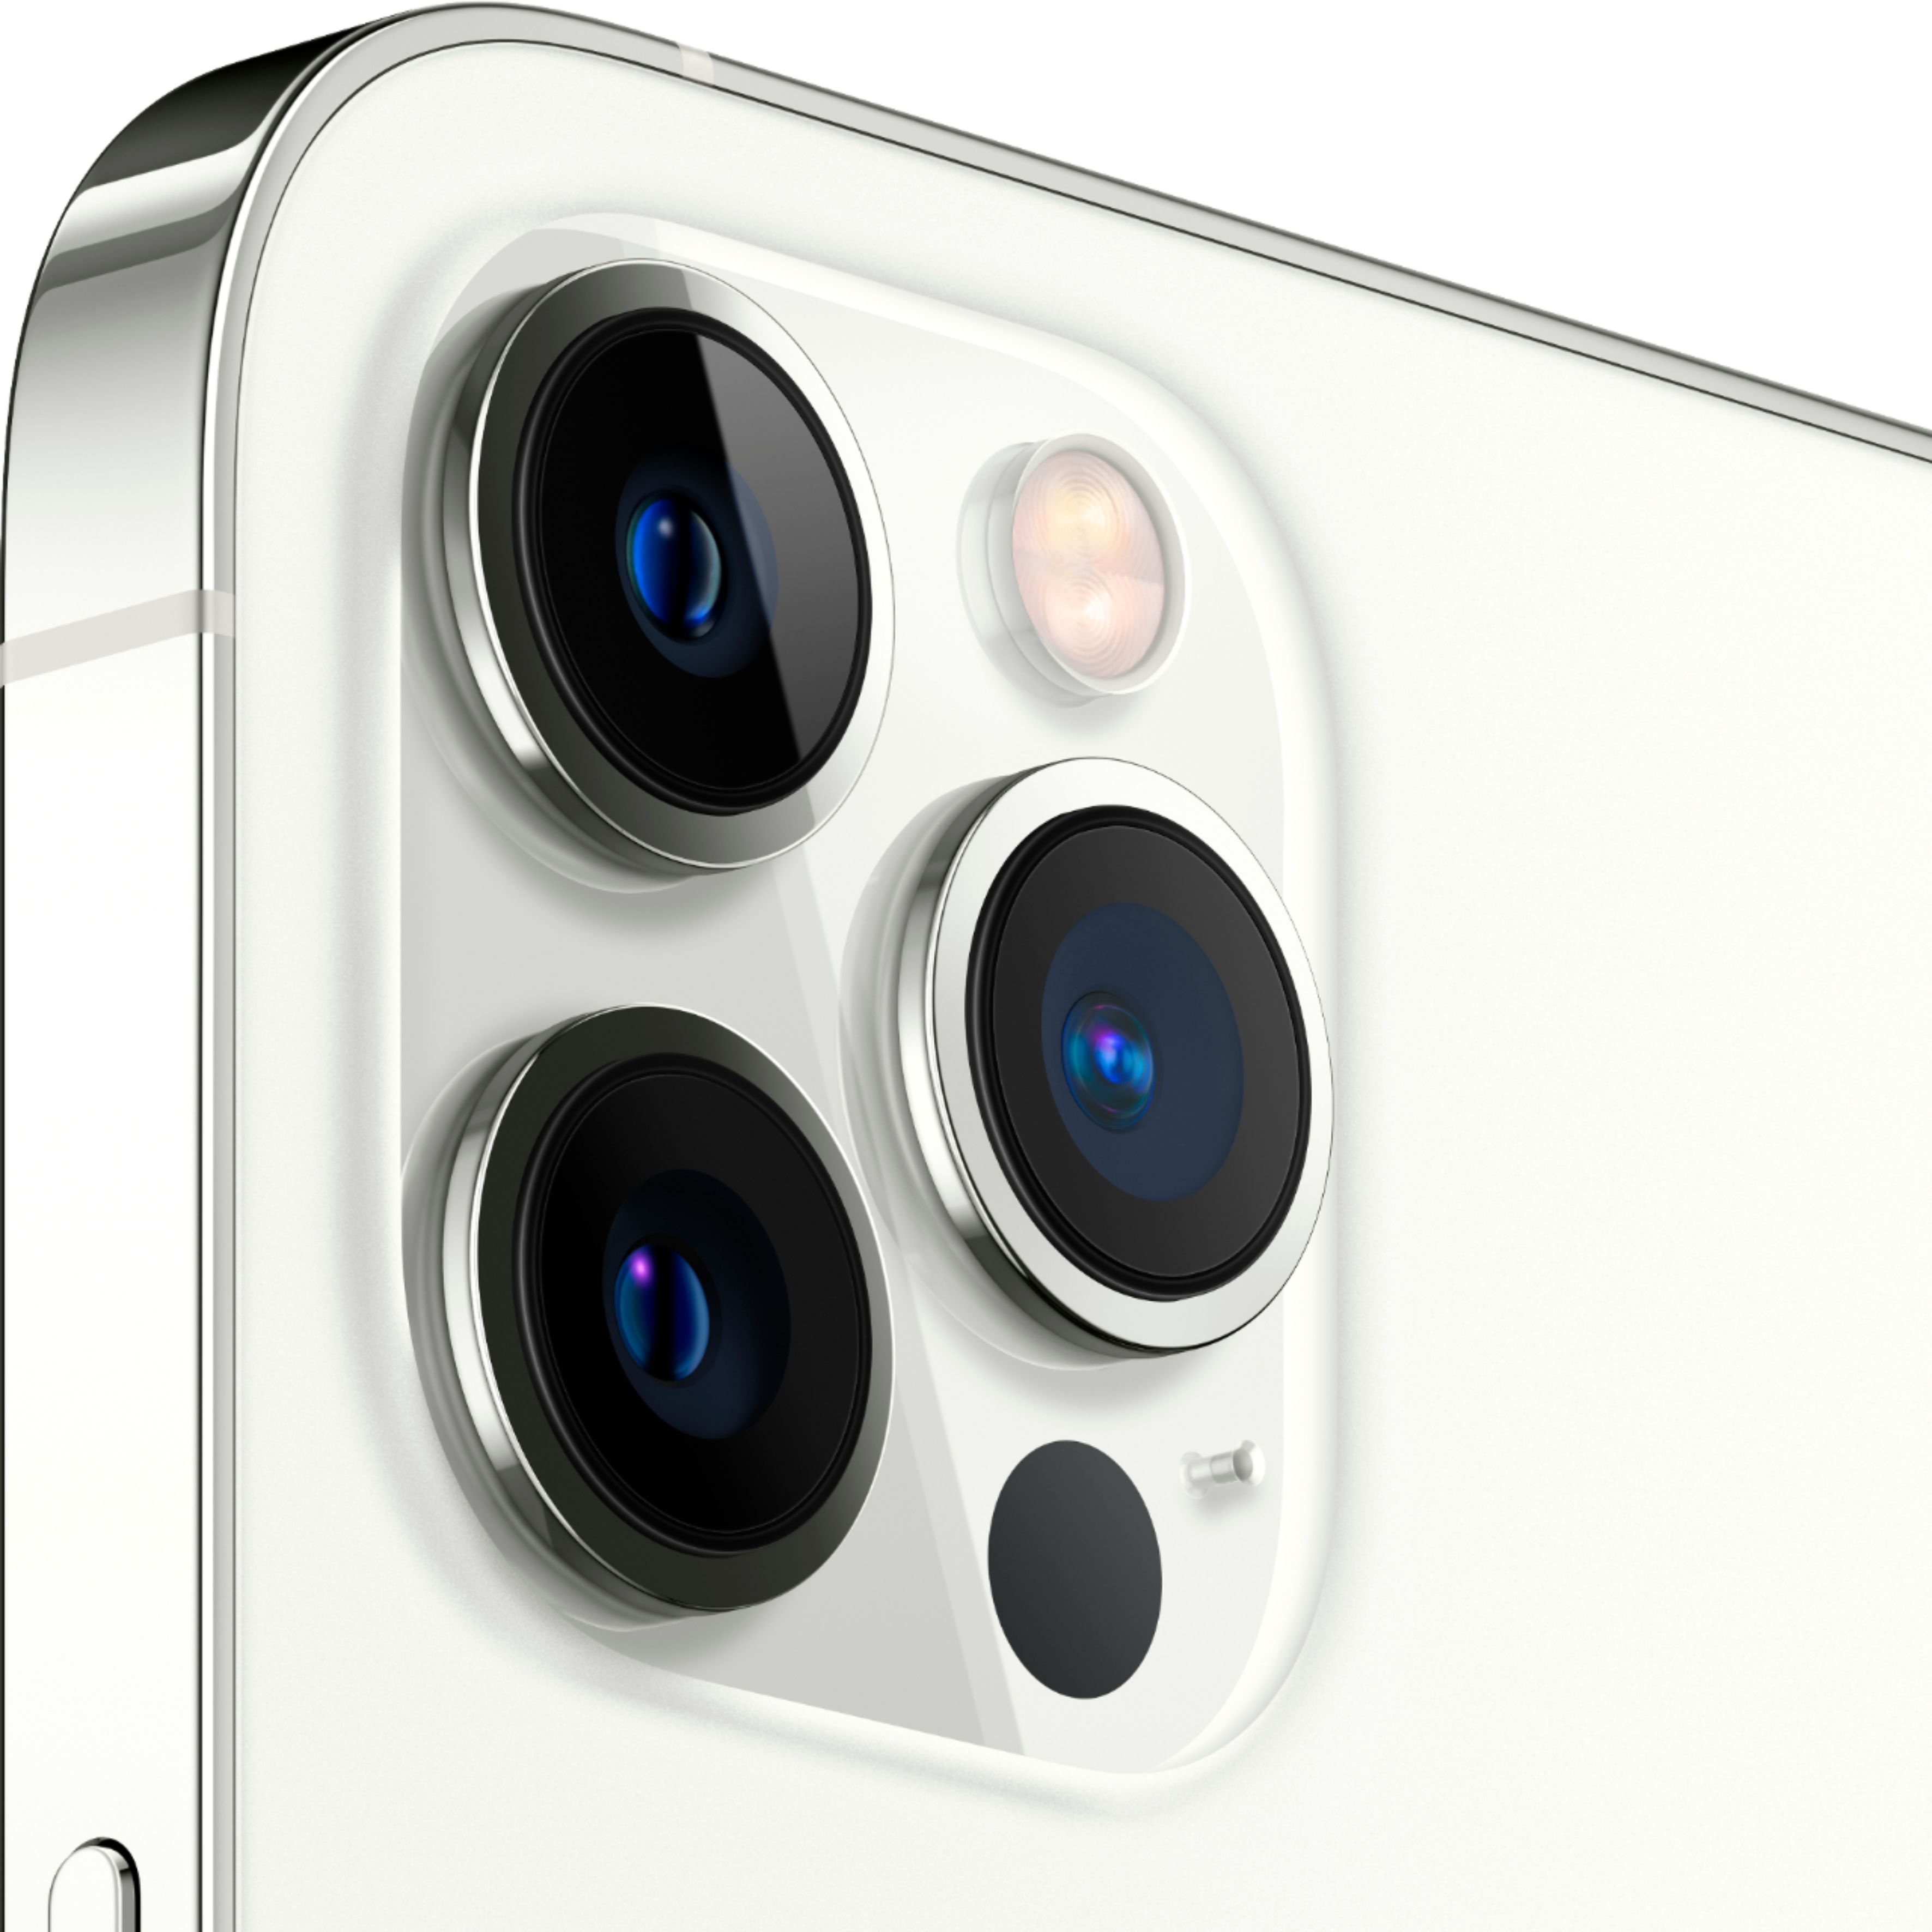 Apple iPhone 12 Pro Max 5G 512GB Silver (Verizon) MGCQ3LL/A - Best Buy